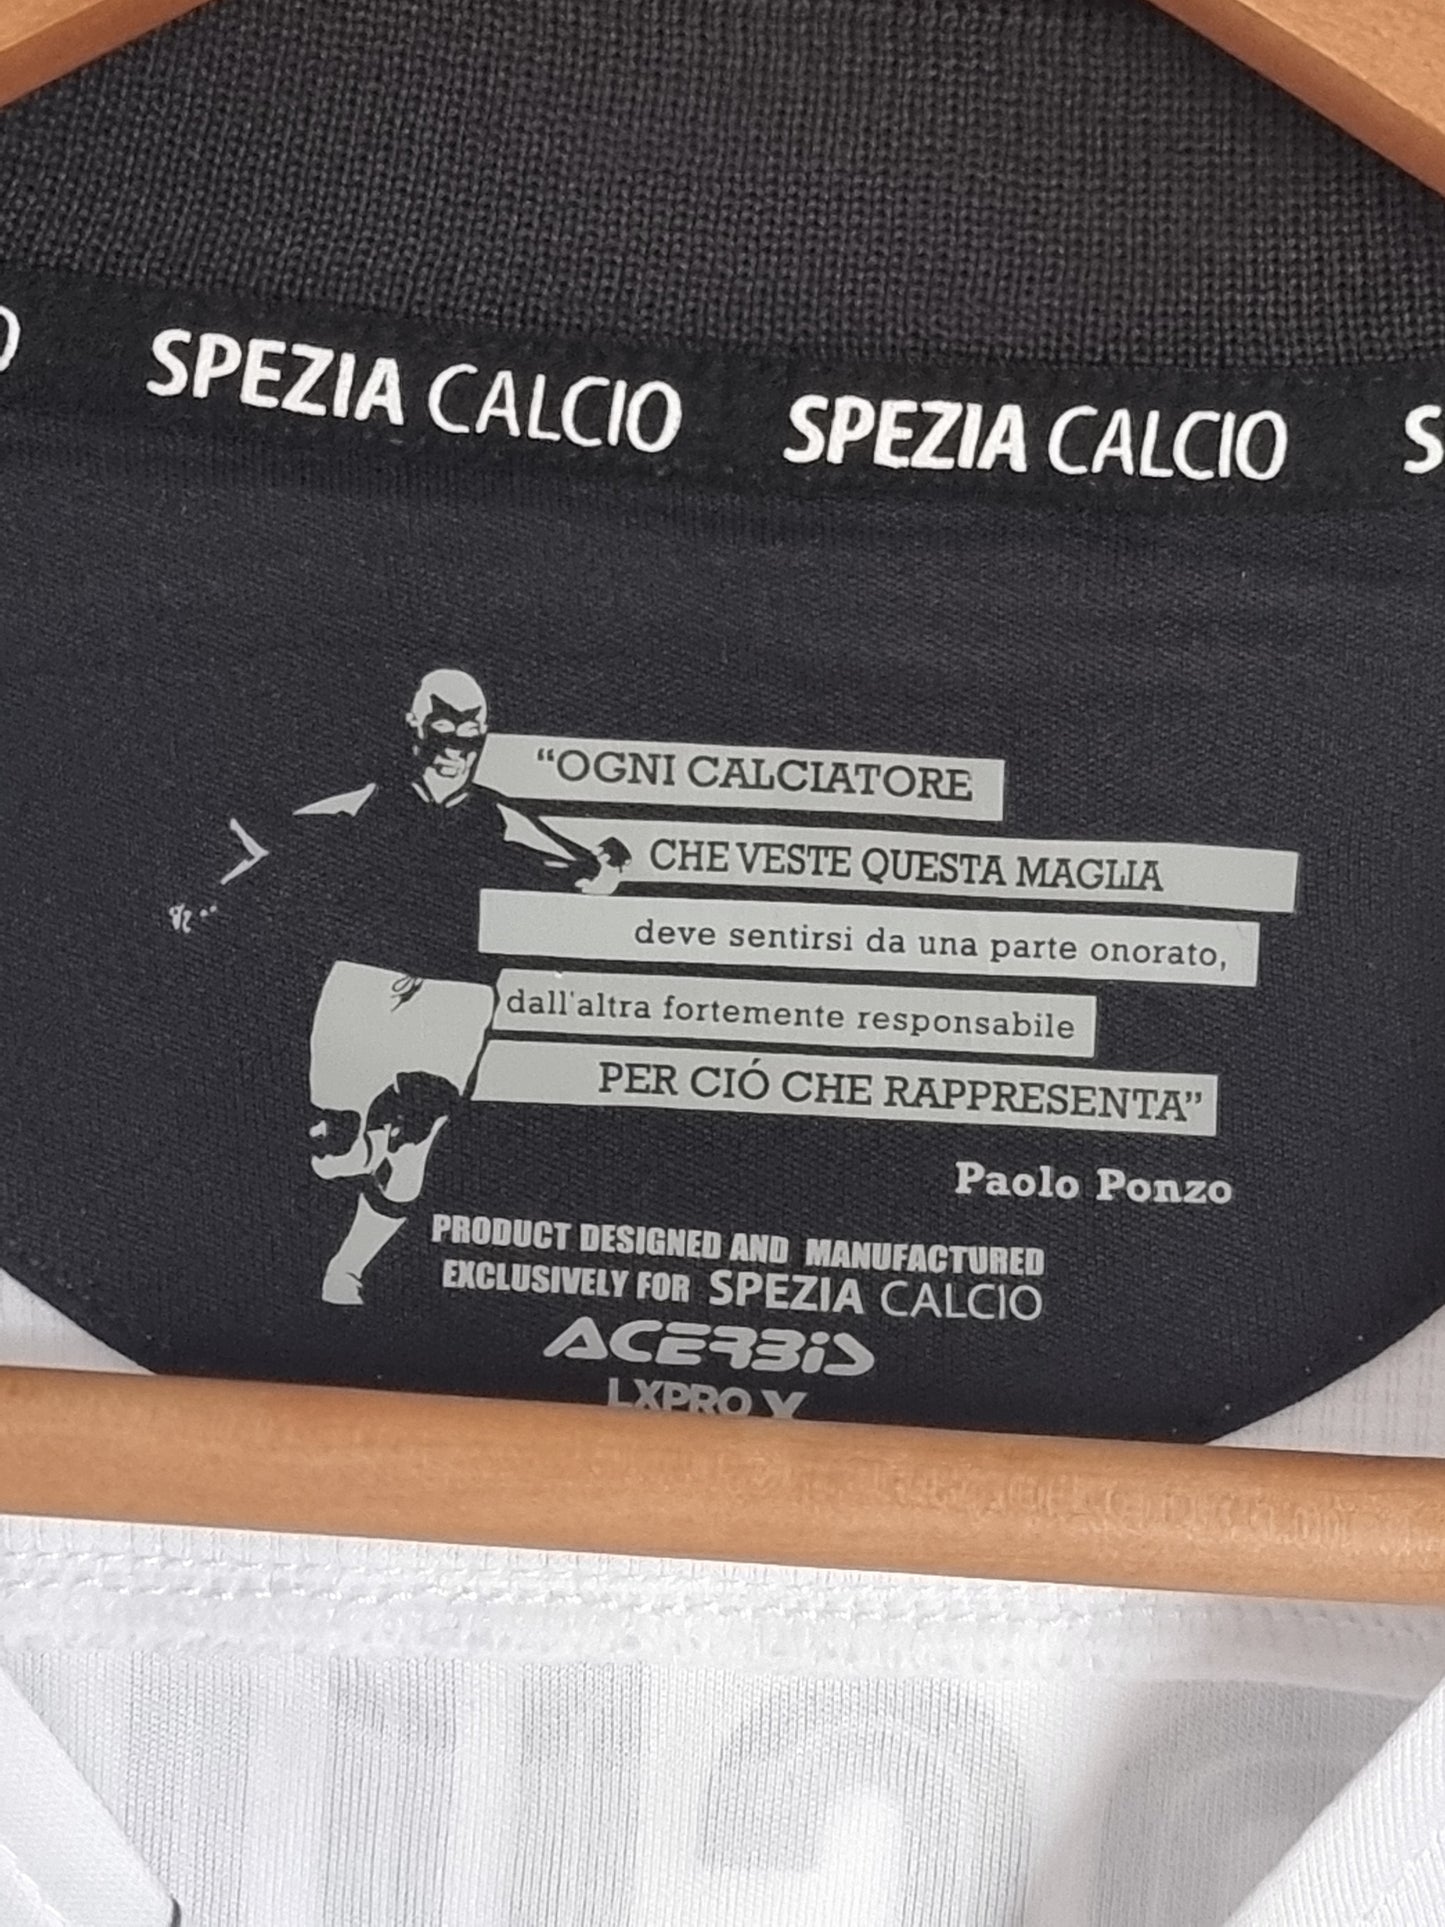 Acerbis Spezia 19/20 'Marchizza 5' Match Issue Home Shirt Large